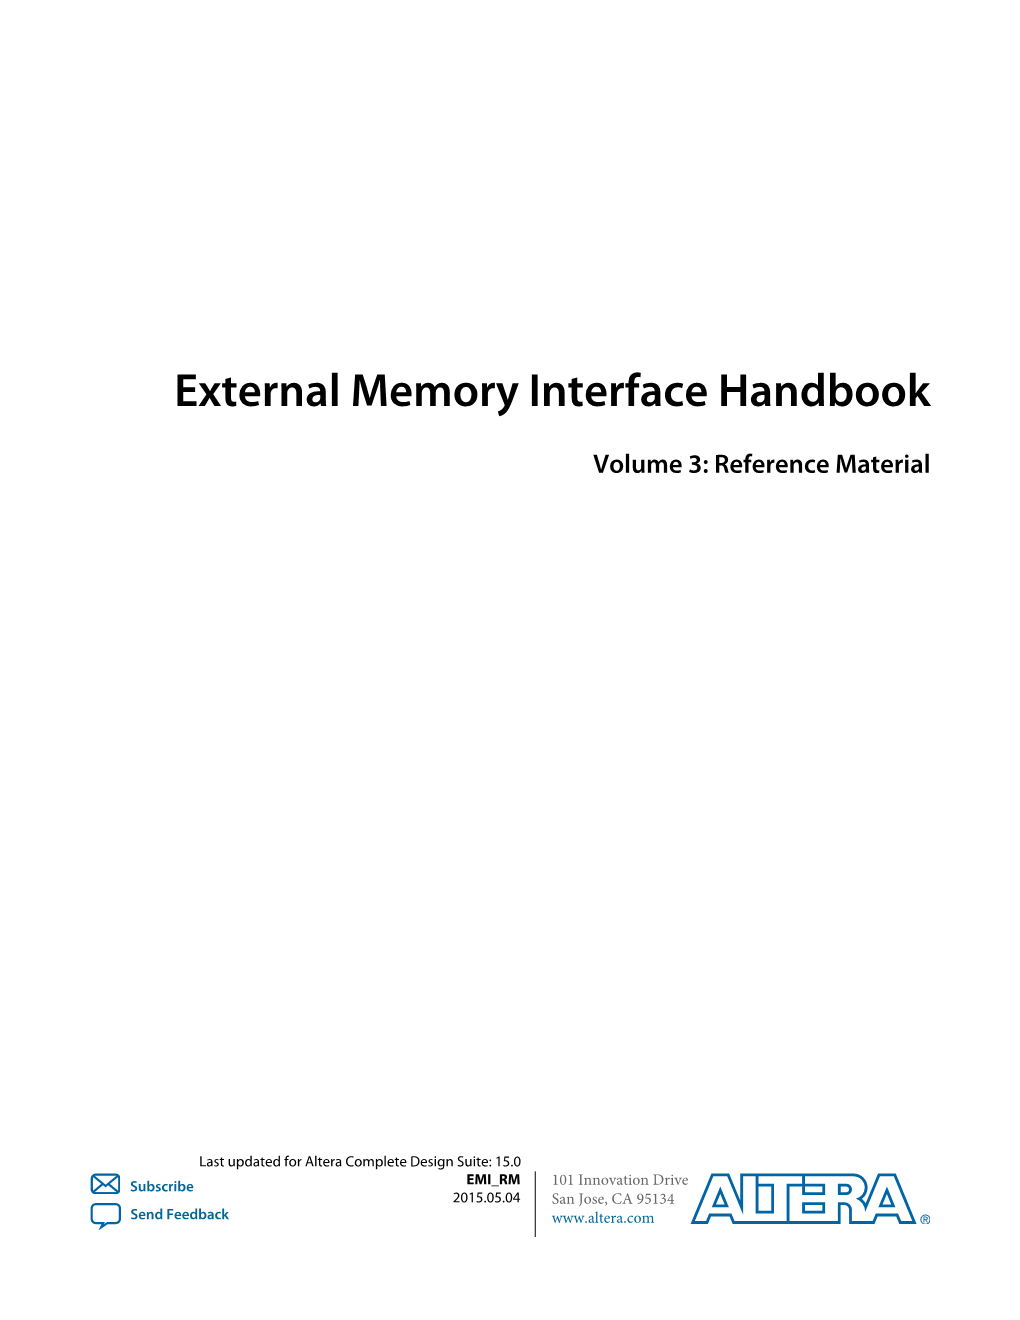 External Memory Interface Handbook Volume 3